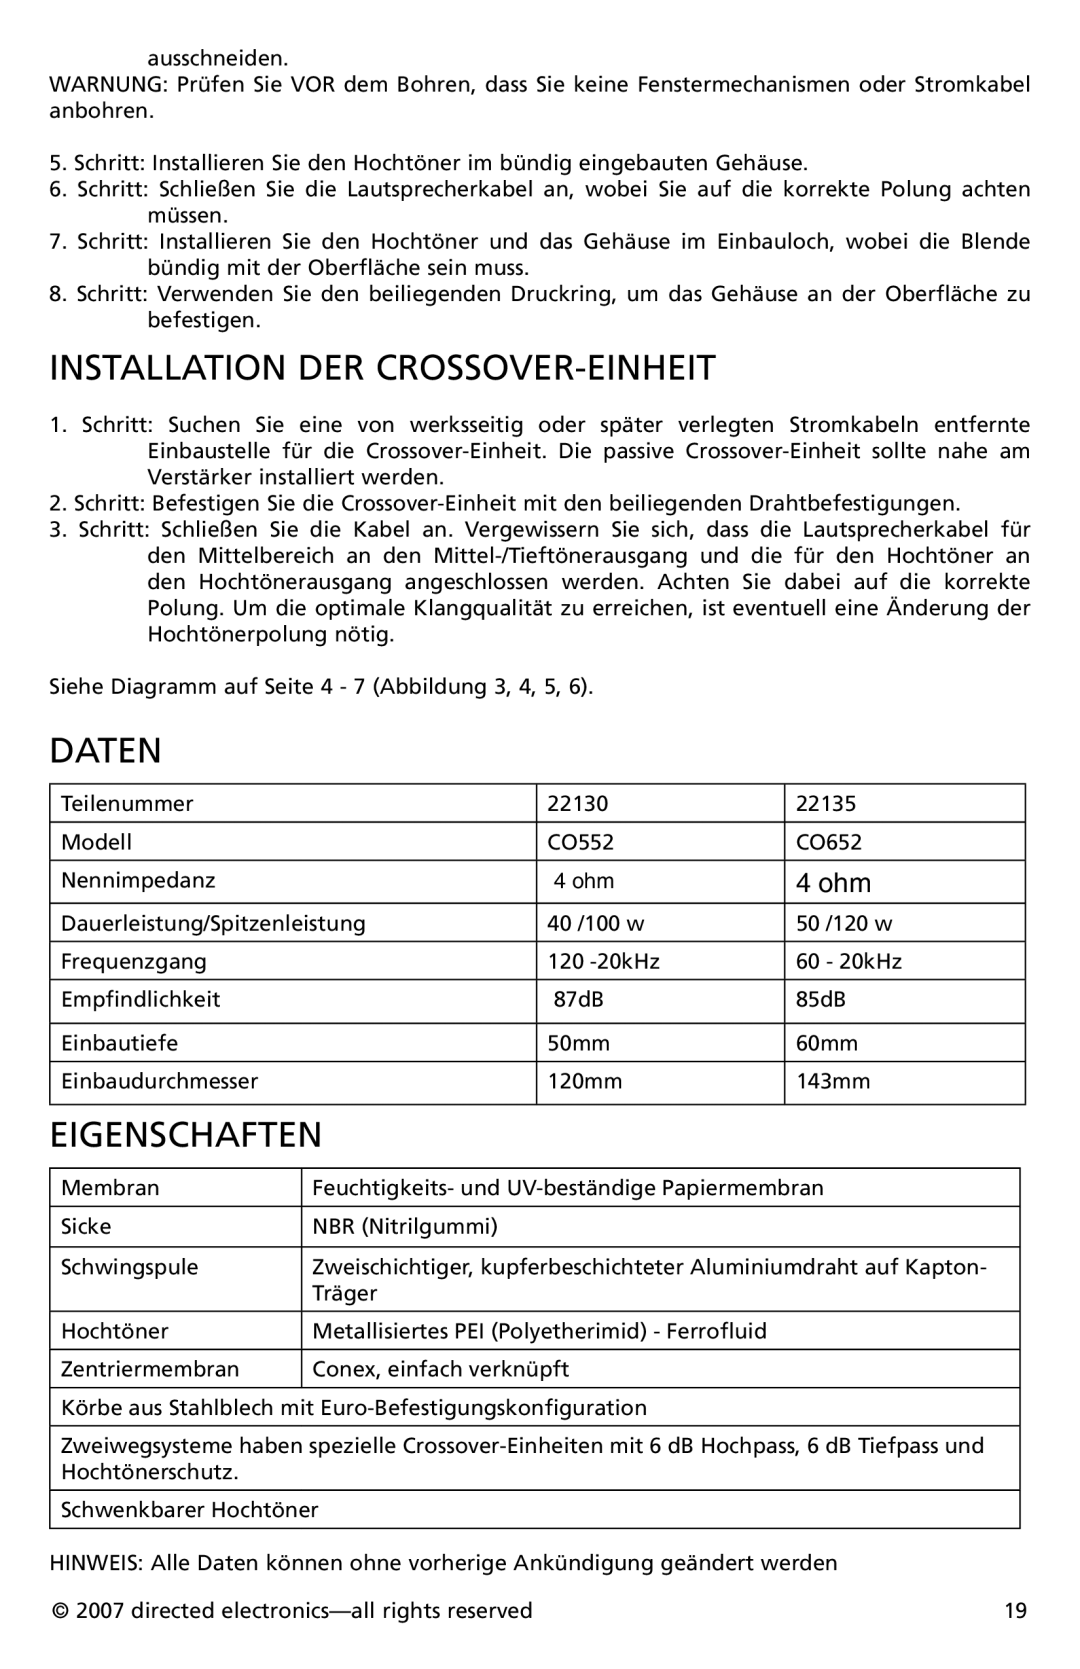 Directed Electronics CO652, CO552 owner manual Installation DER CROSSOVER-EINHEIT, Daten, Eigenschaften 